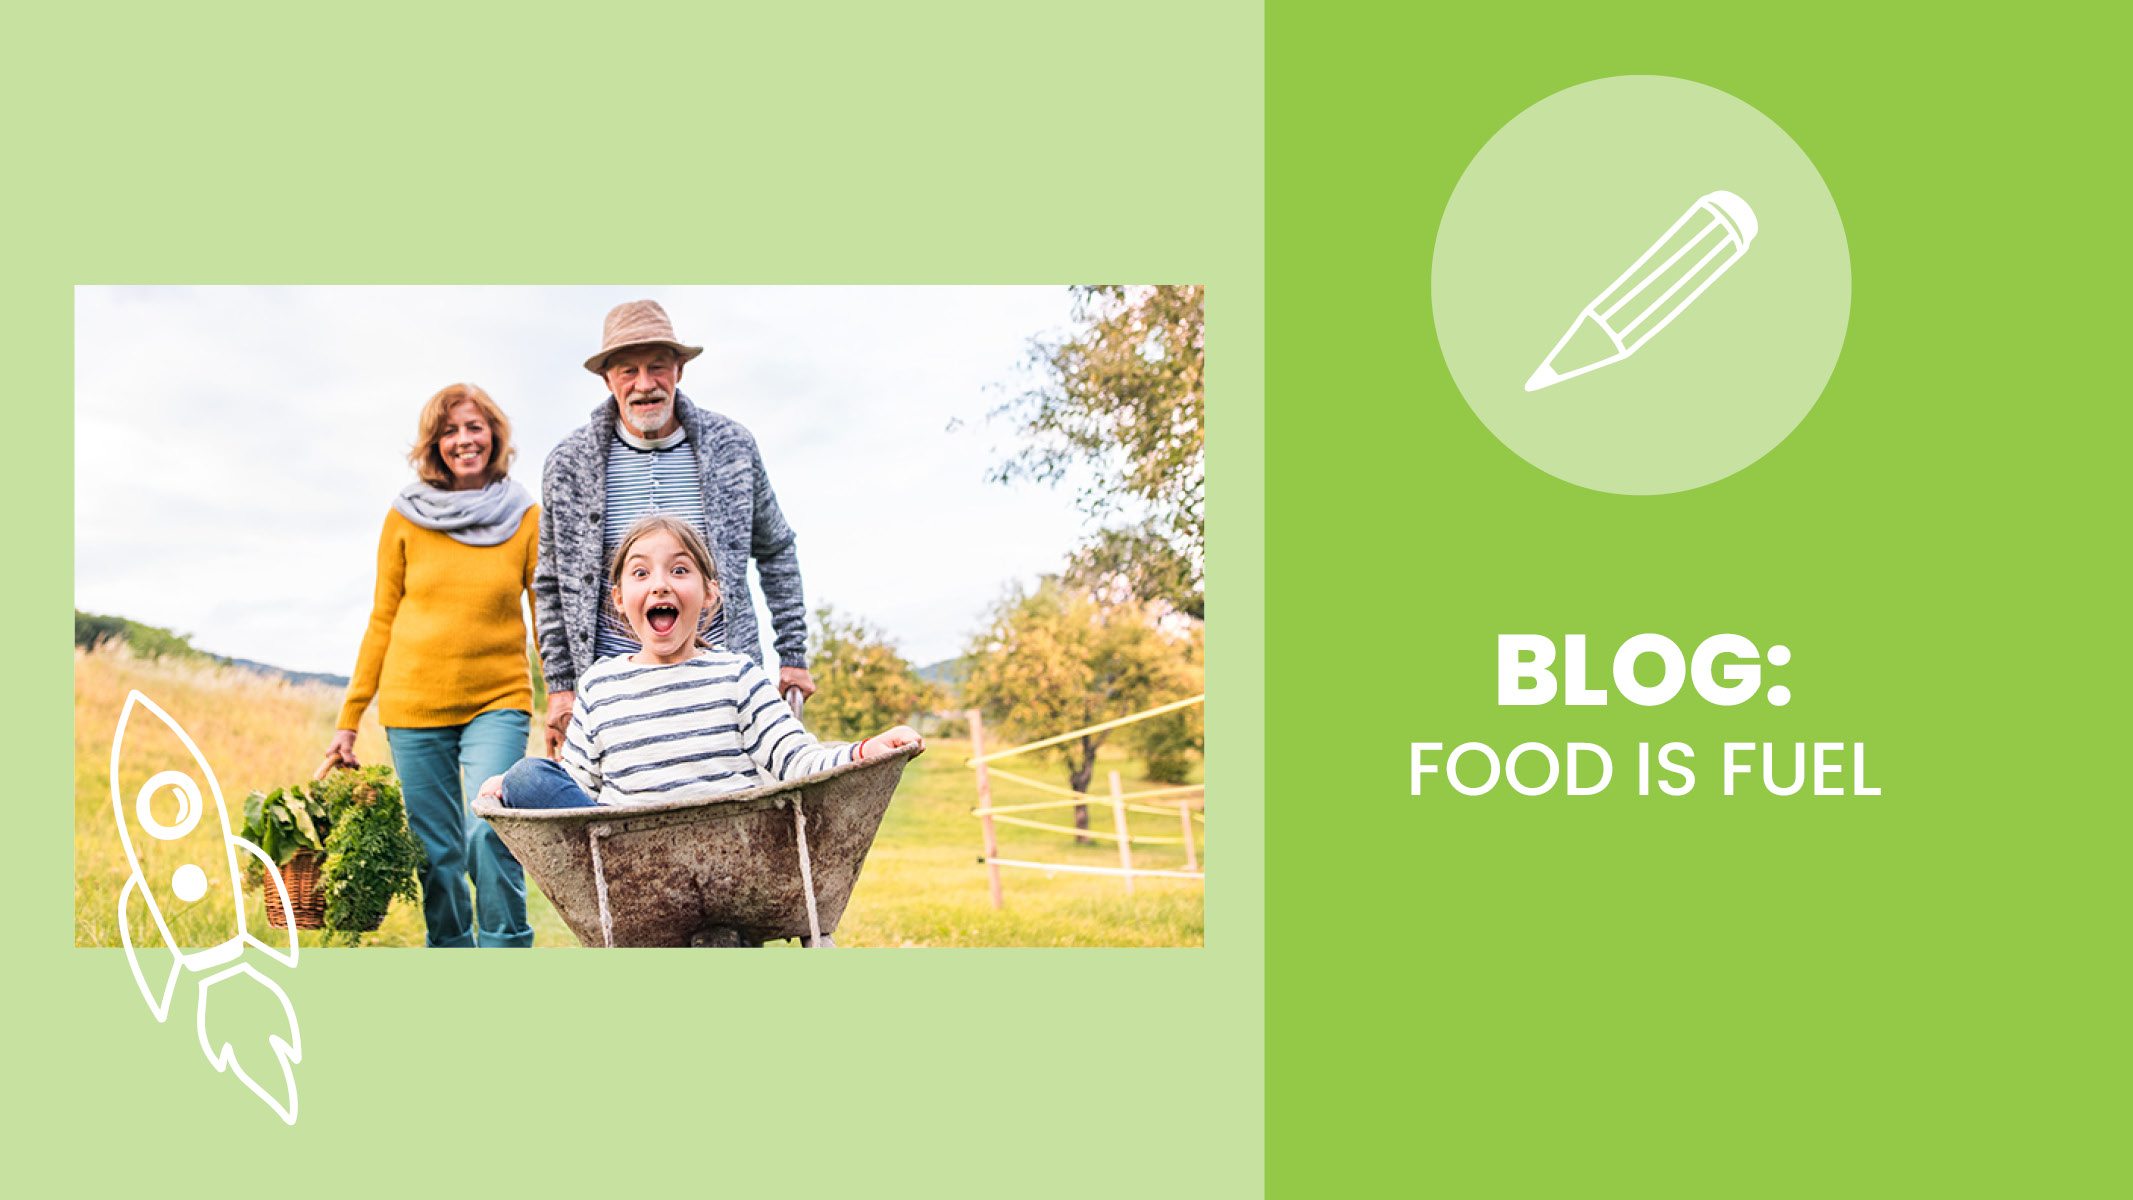 Healthy family explores fresh produce at a farm while daughter rides in wheelbarrow